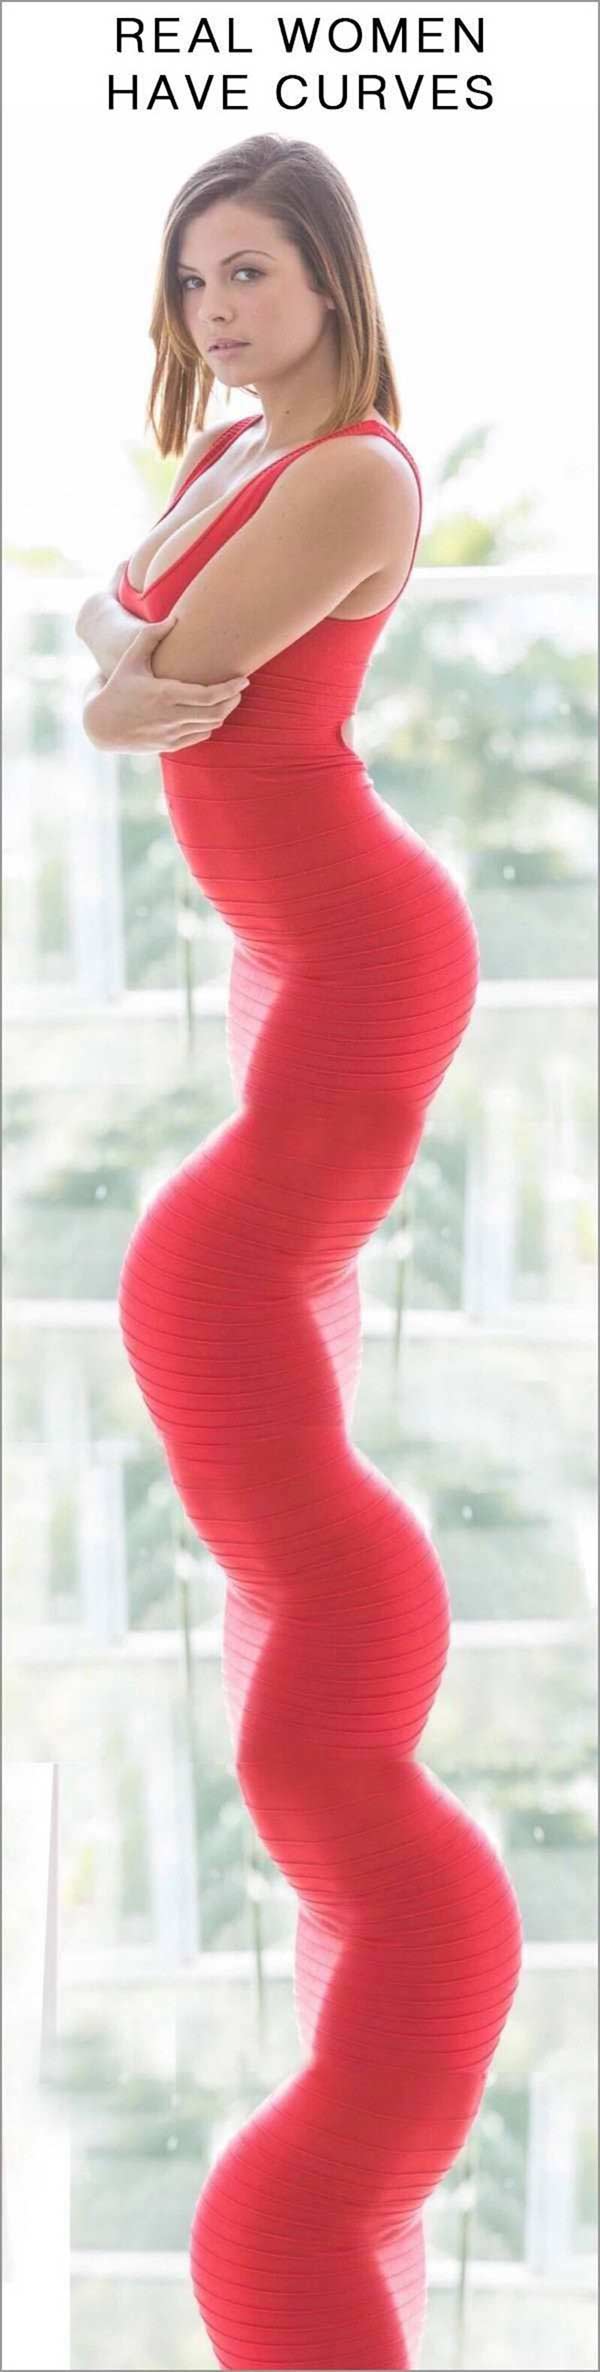 [Image: real-woman-curves.jpg]